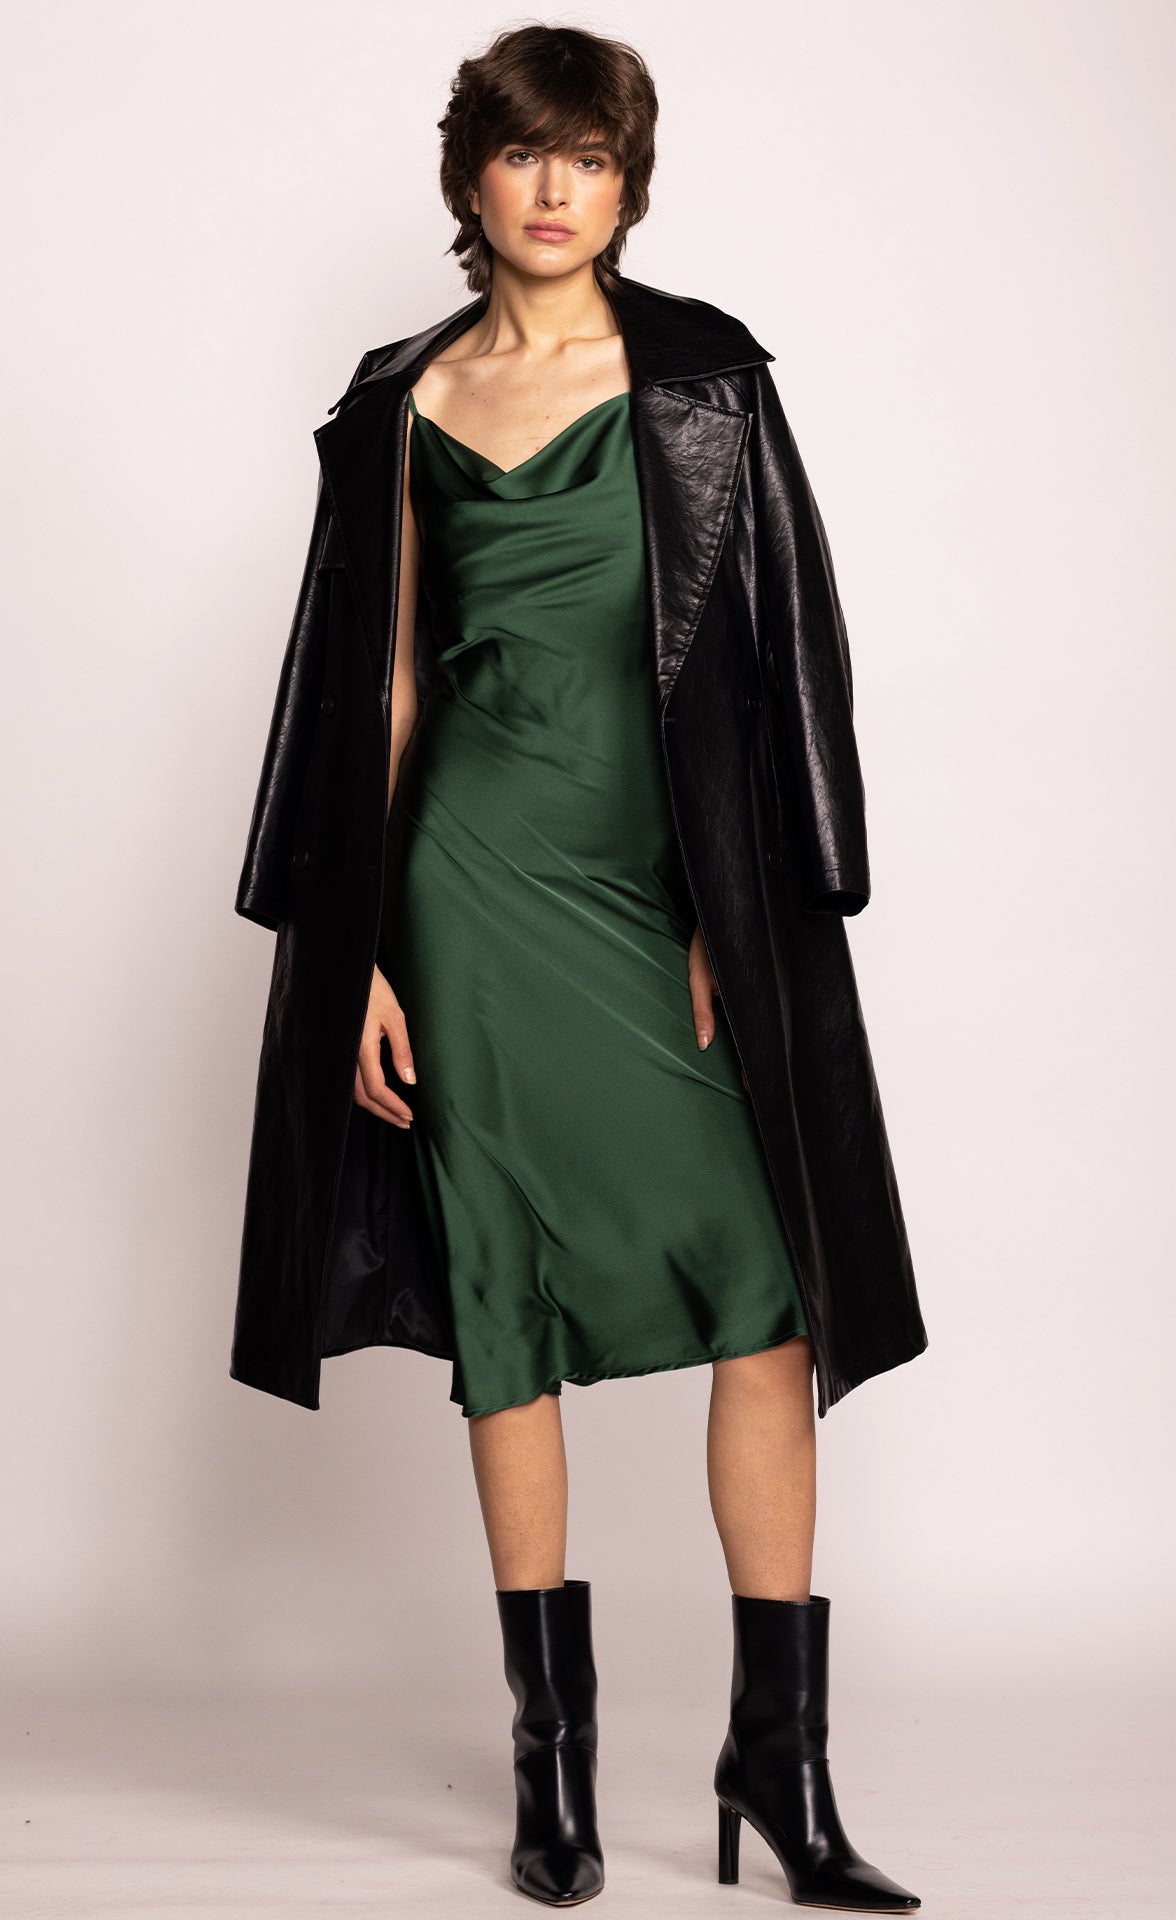 The Vivian Dress - Dark Green